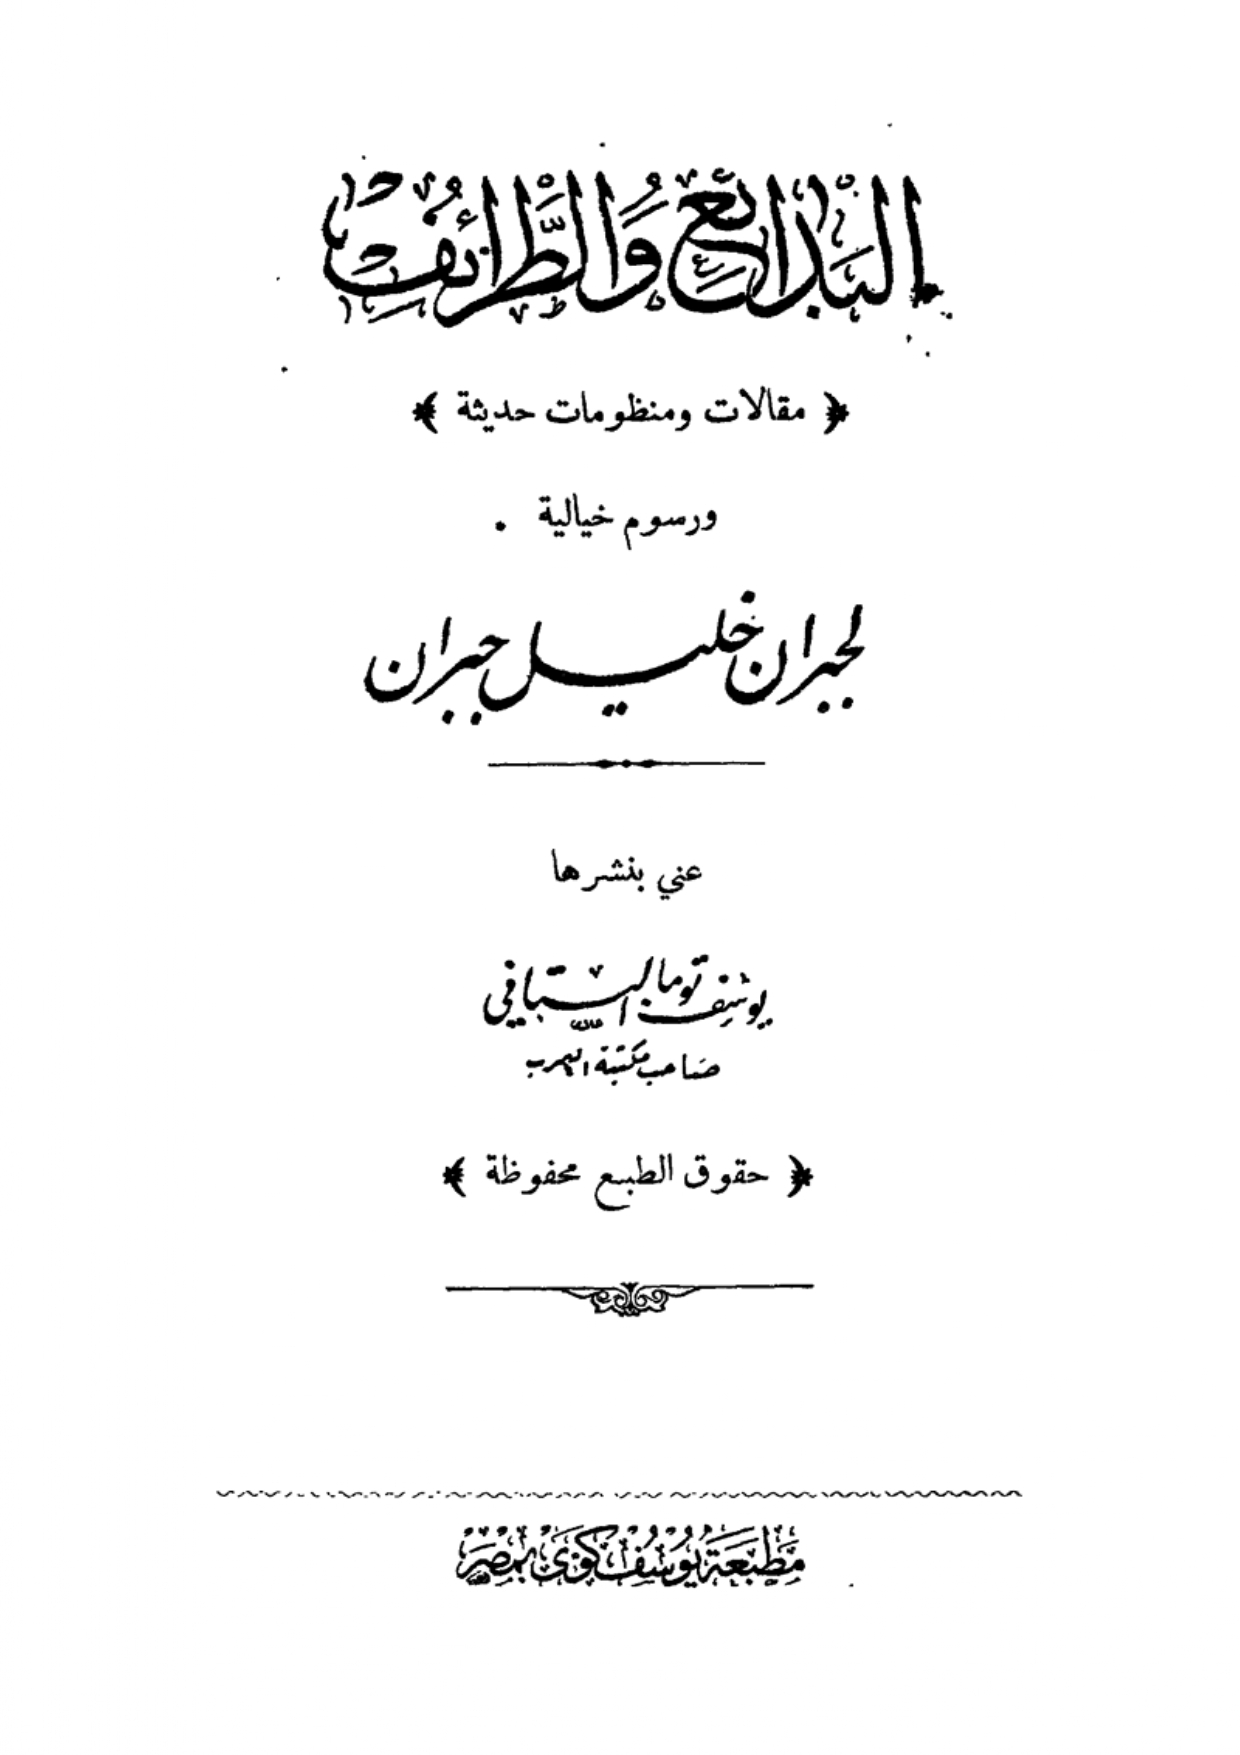 Al-Bada'i' wa al-Tara'if [Best Things and Masterpieces], al-Qahira: Yusuf Bustani, 1923.